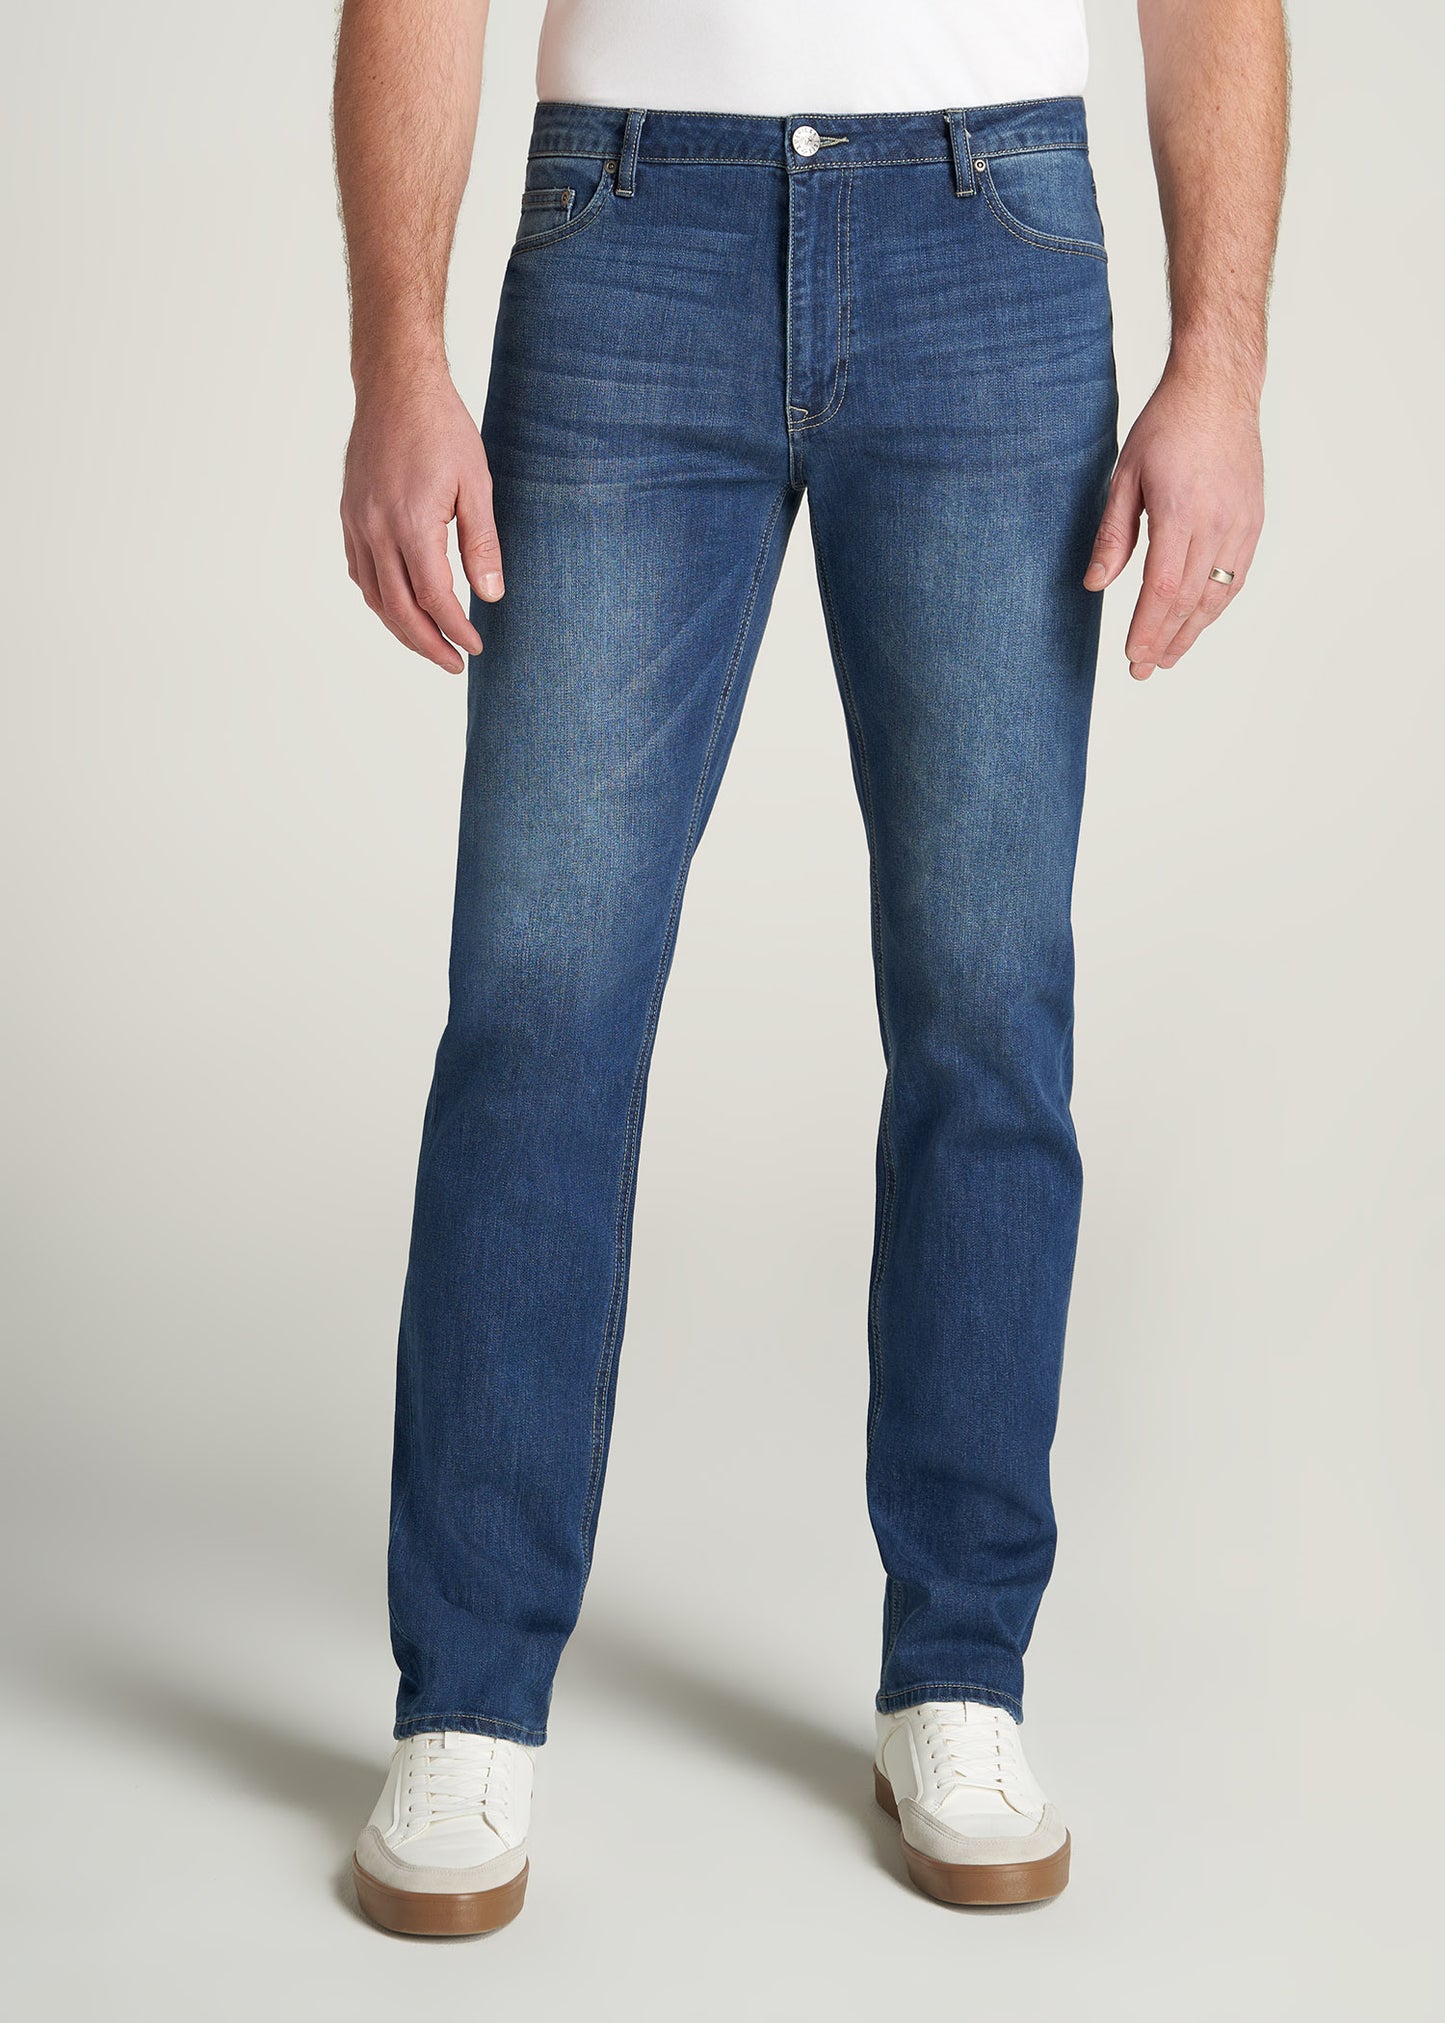    American-Tall-Men-J1-StraightLeg-Jeans-ClassicBlue-front